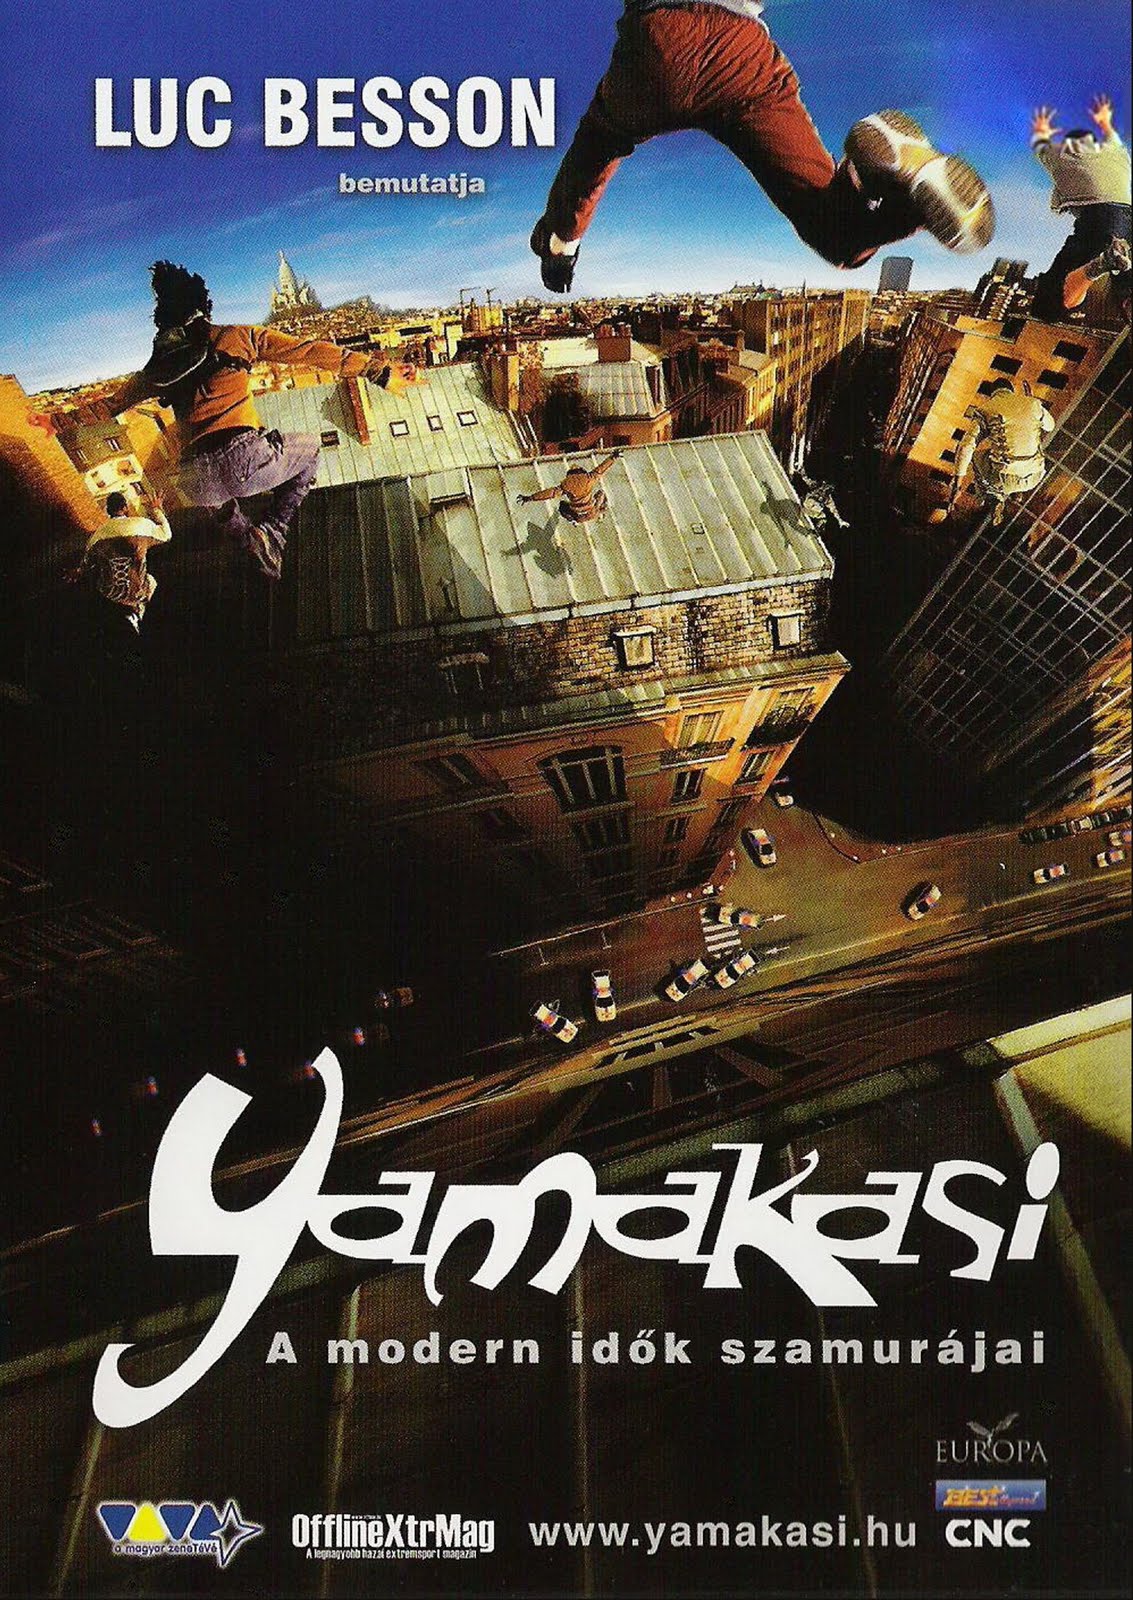 Yamakasi underground текст. Ямакаси 2001. Hajime Yamakasi. Лоран Пьемонтези Ямакаси.